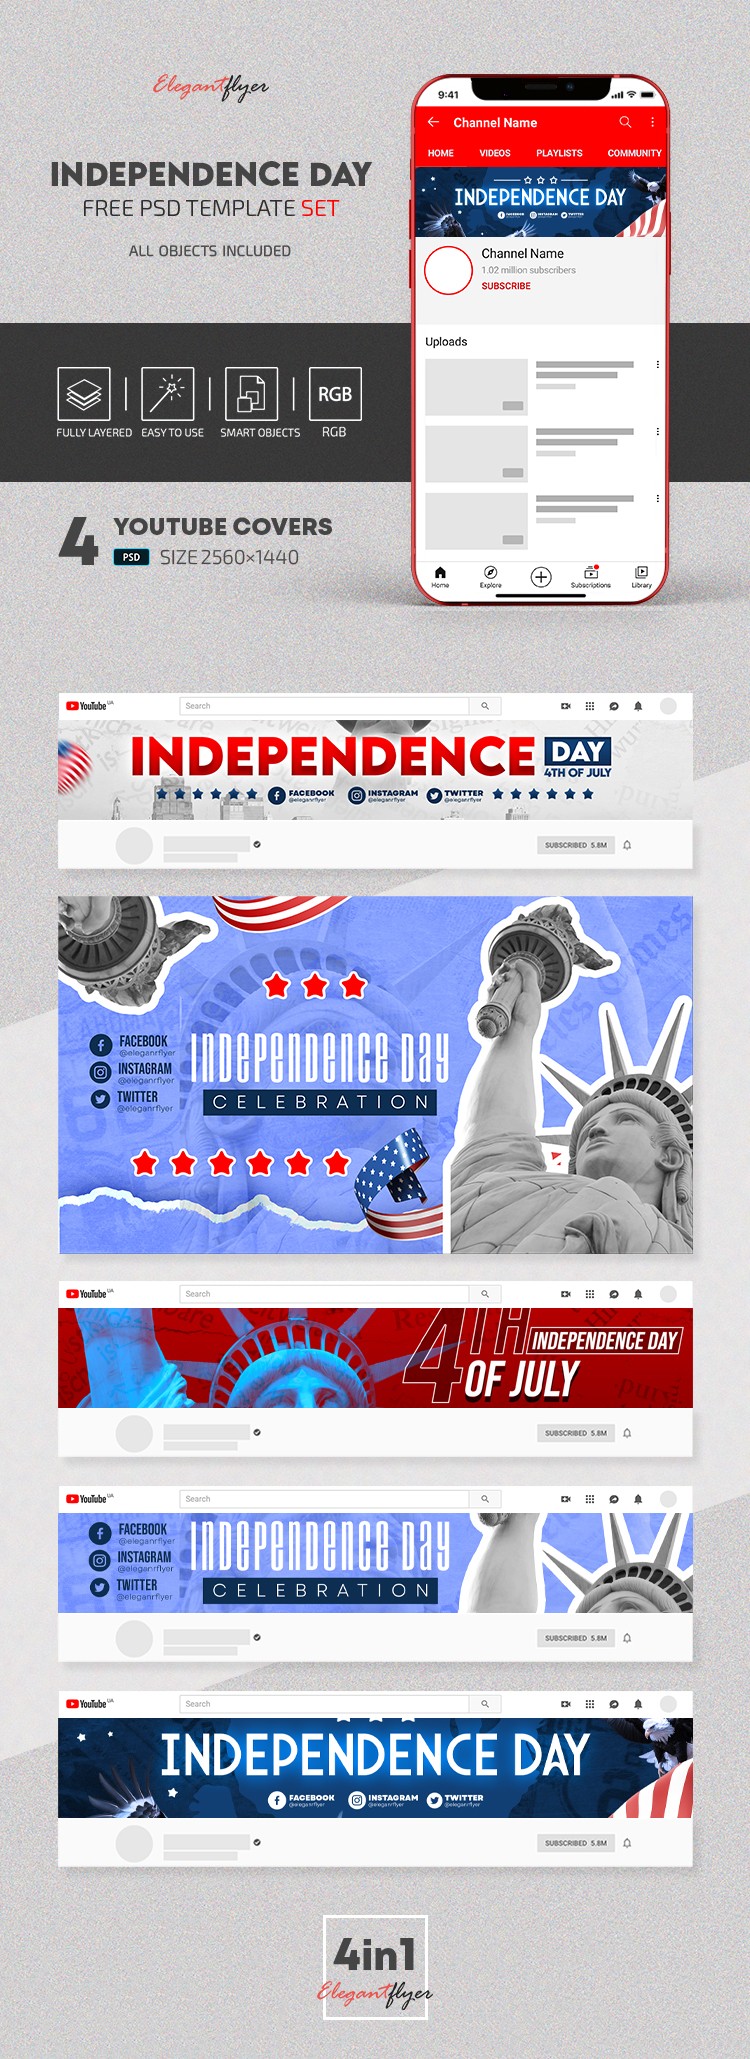 Independence Day Youtube by ElegantFlyer